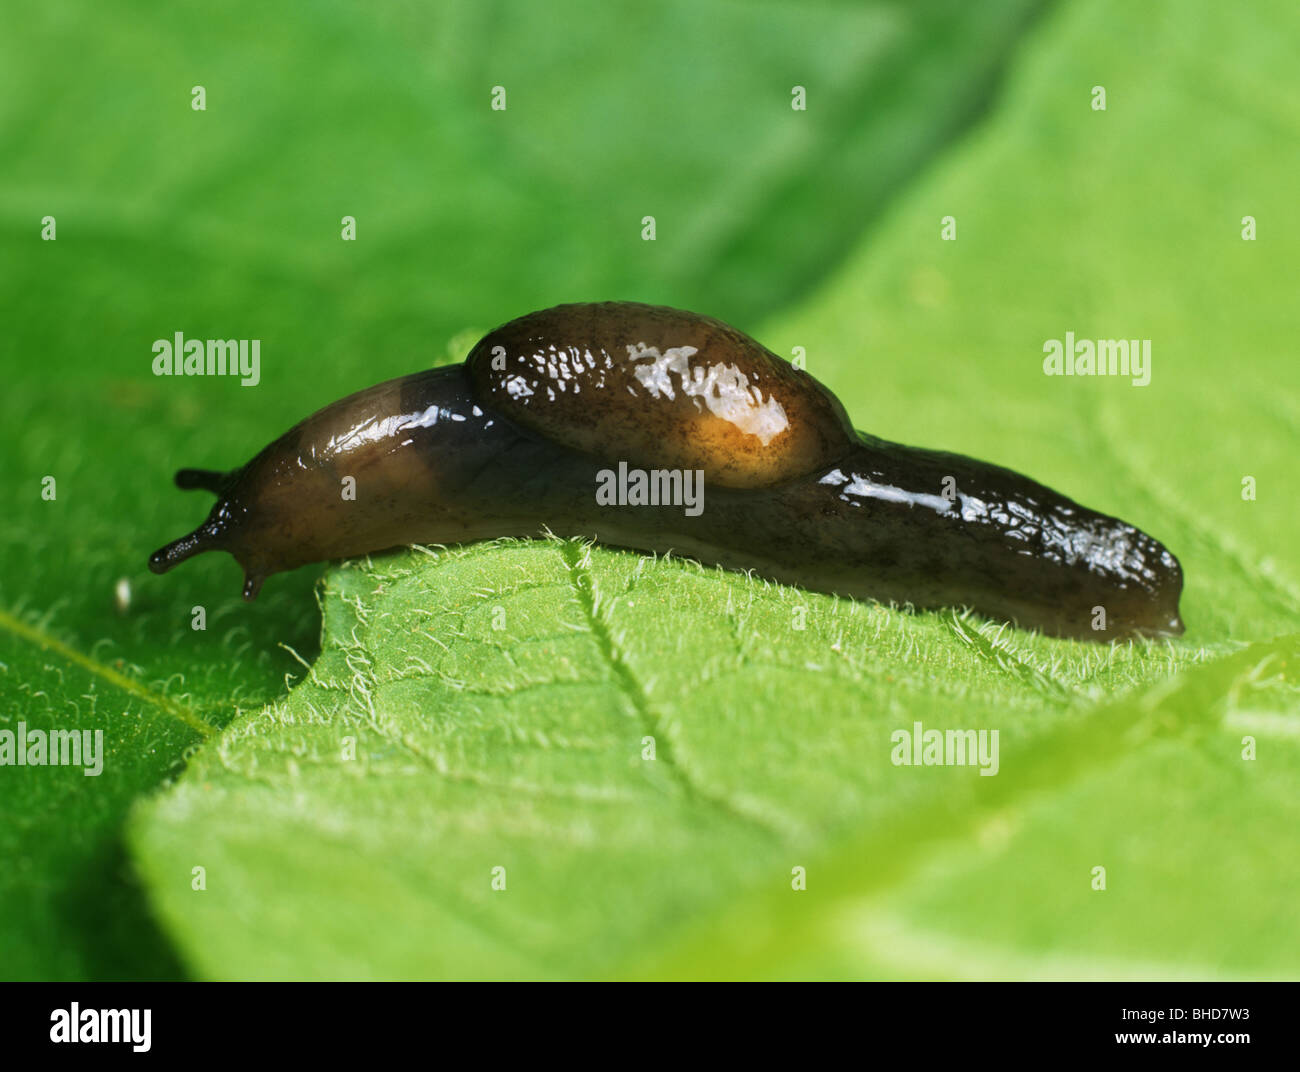 Slug with swollen mantle parasitised by Phasmarhabditis nematodes Stock Photo